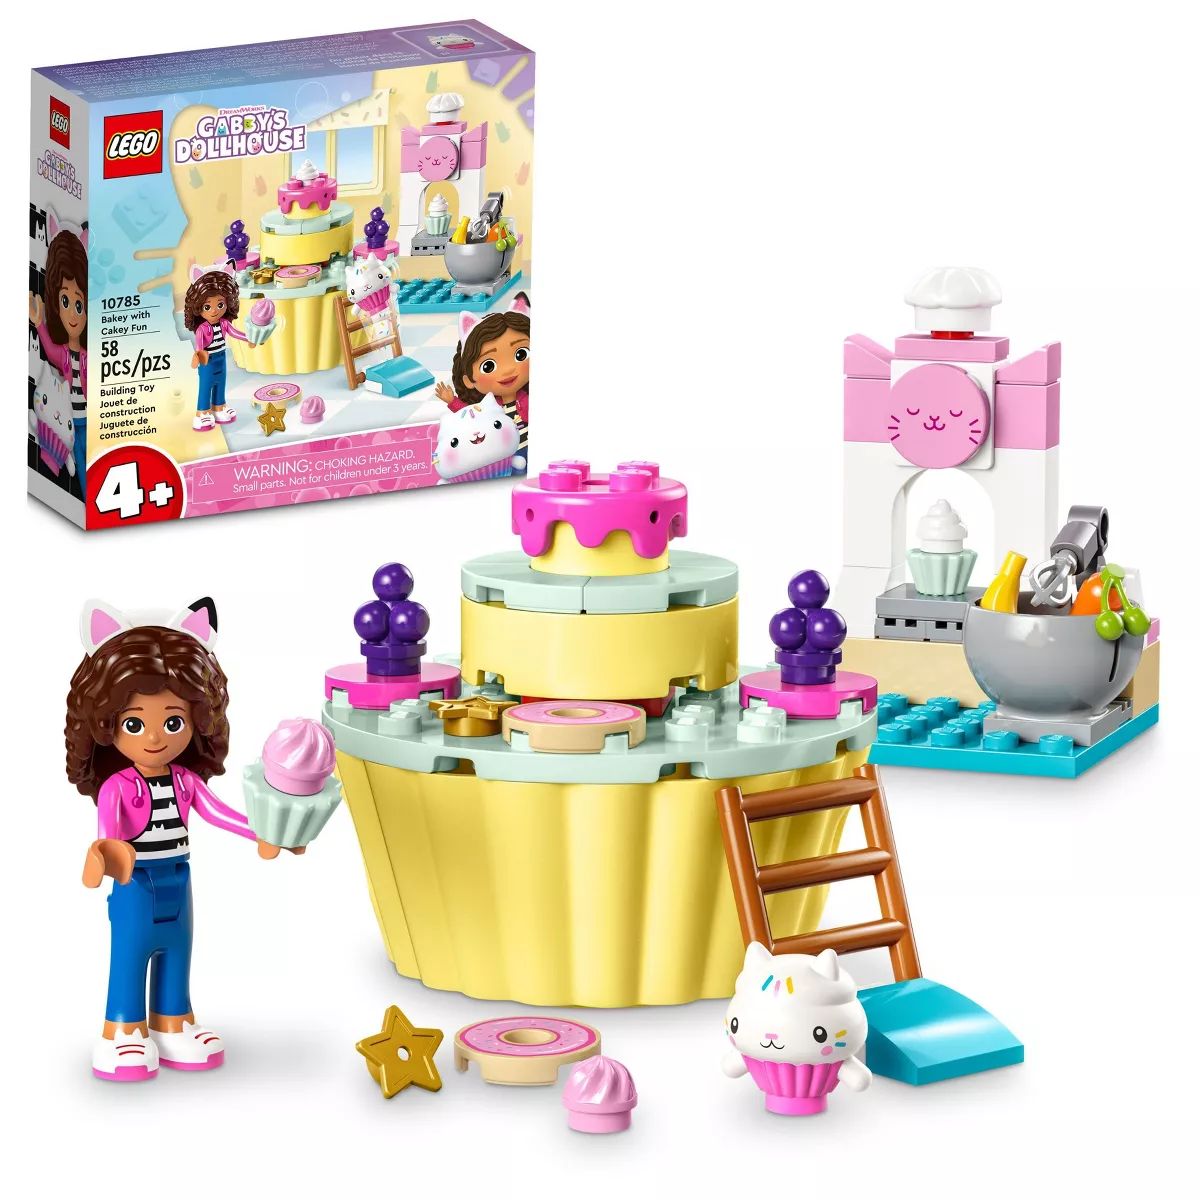 LEGO Gabby's Dollhouse Bakey With Cakey Fun Building Toy Set 10785 | Target